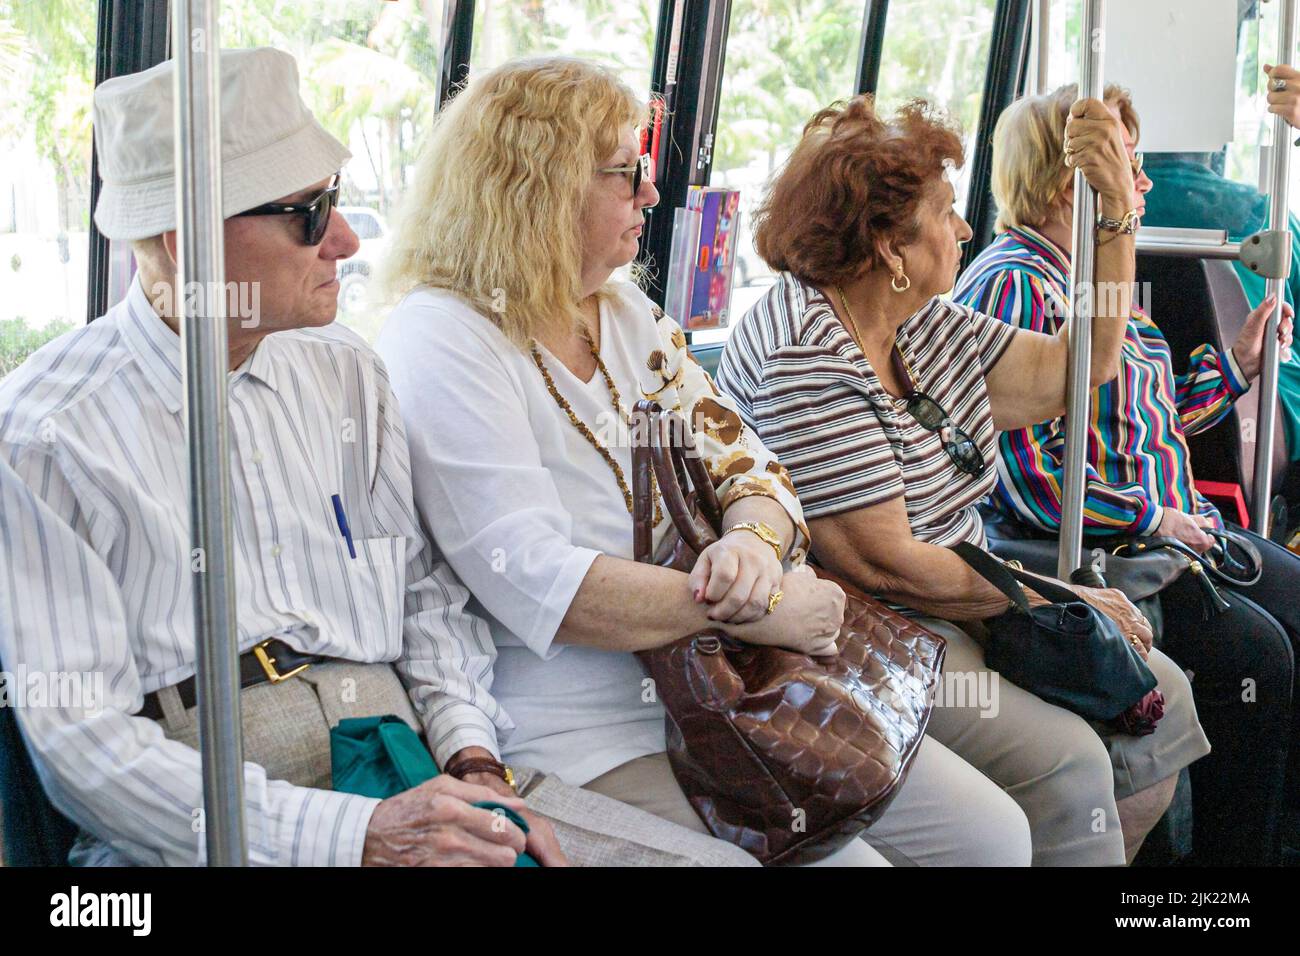 Miami Beach Florida,Miami-Dade Metrobus onboard inside interior public bus passenger passengers rider riders,transportation group people person Stock Photo